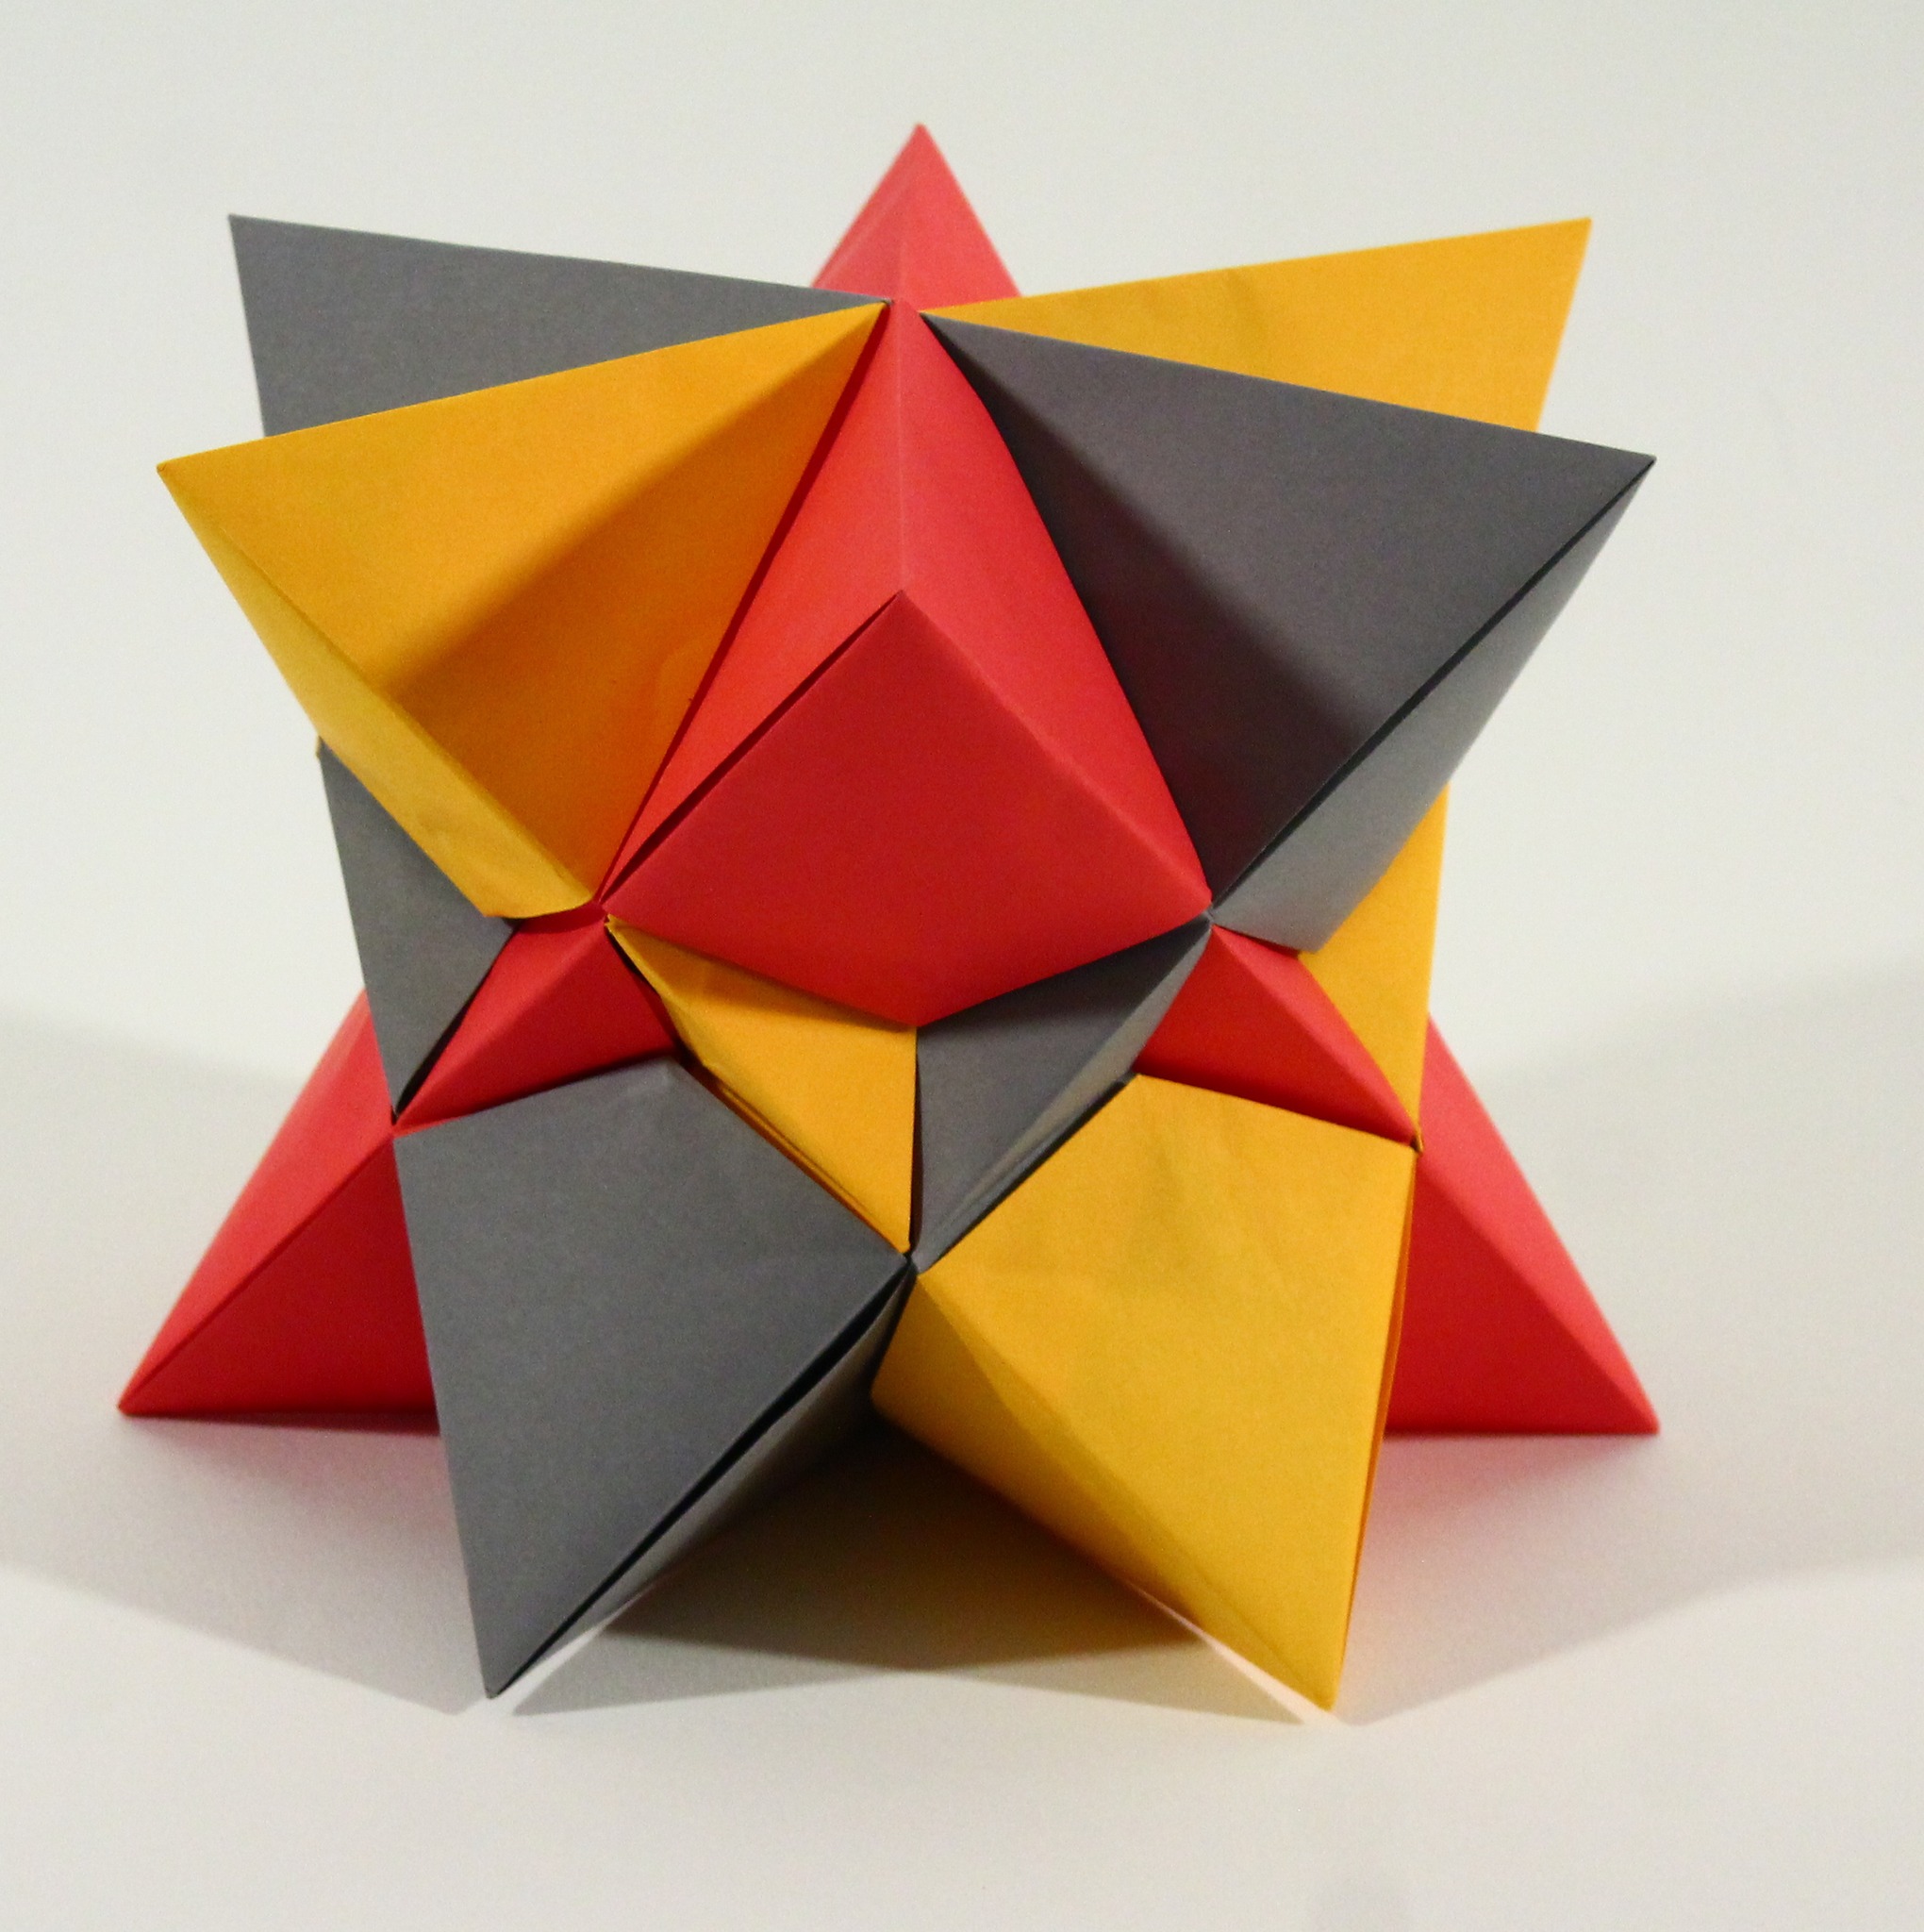 compound of three tetrahedra